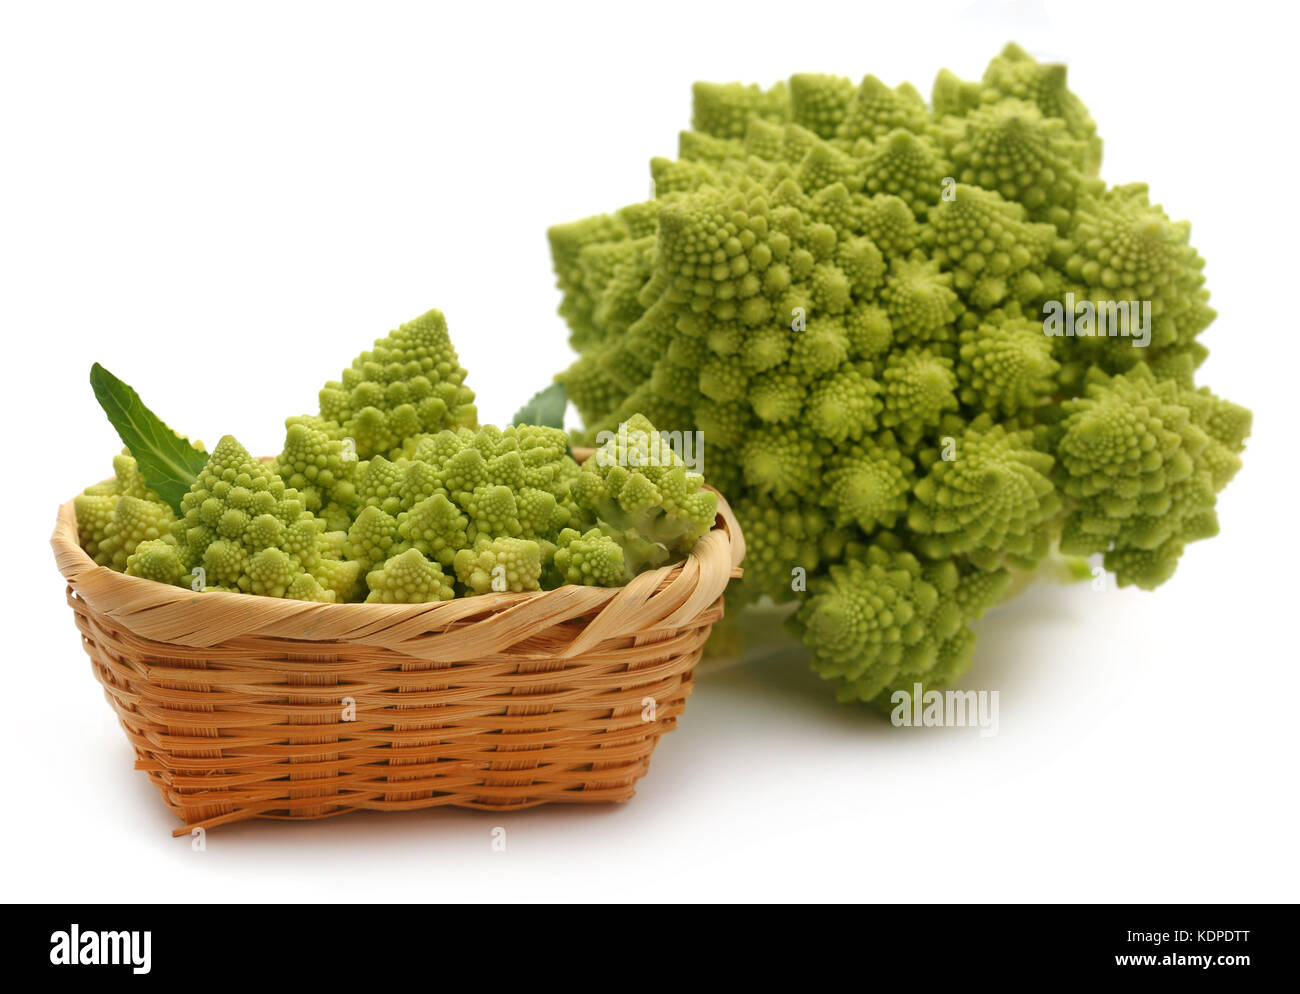 Romanesco broccoli in a basket over white background Stock Photo